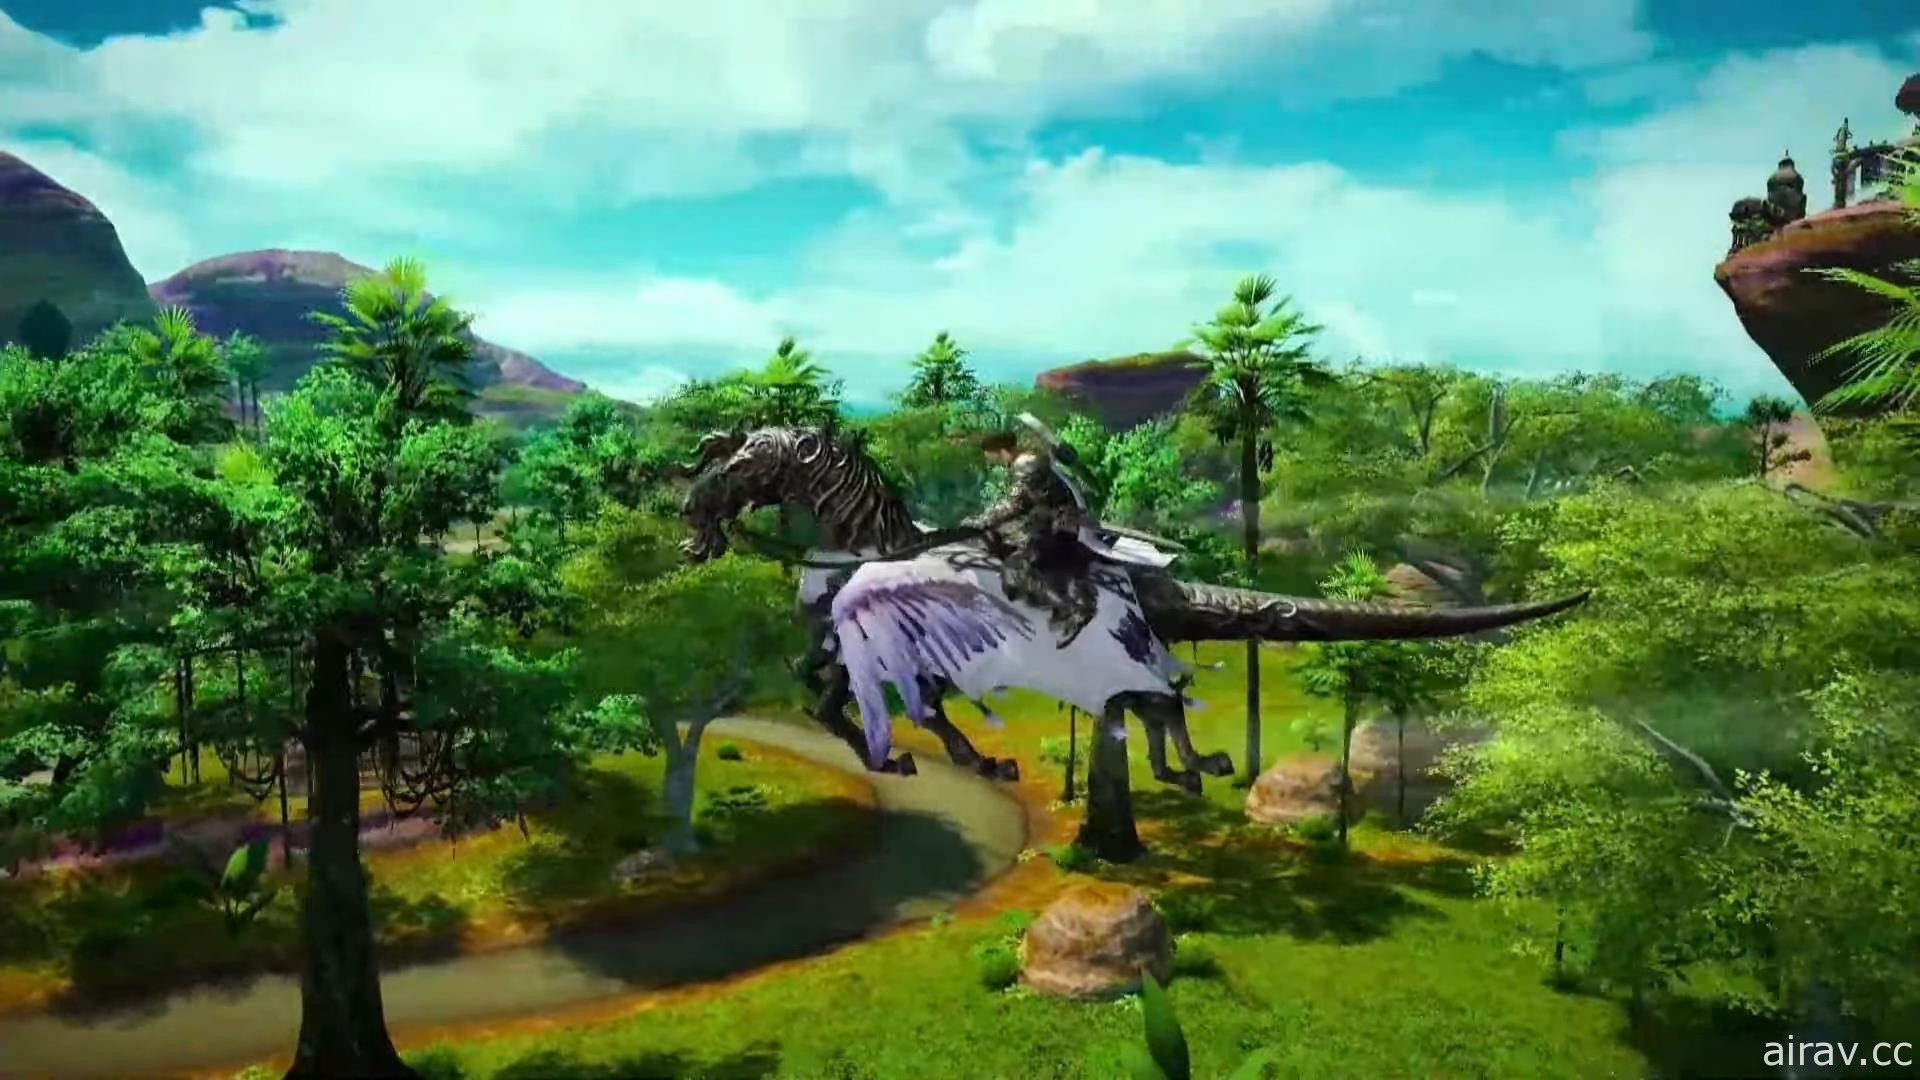 《Final Fantasy XIV》最新擴充資料片《曉月的終焉》公開新區域和城市的新資訊